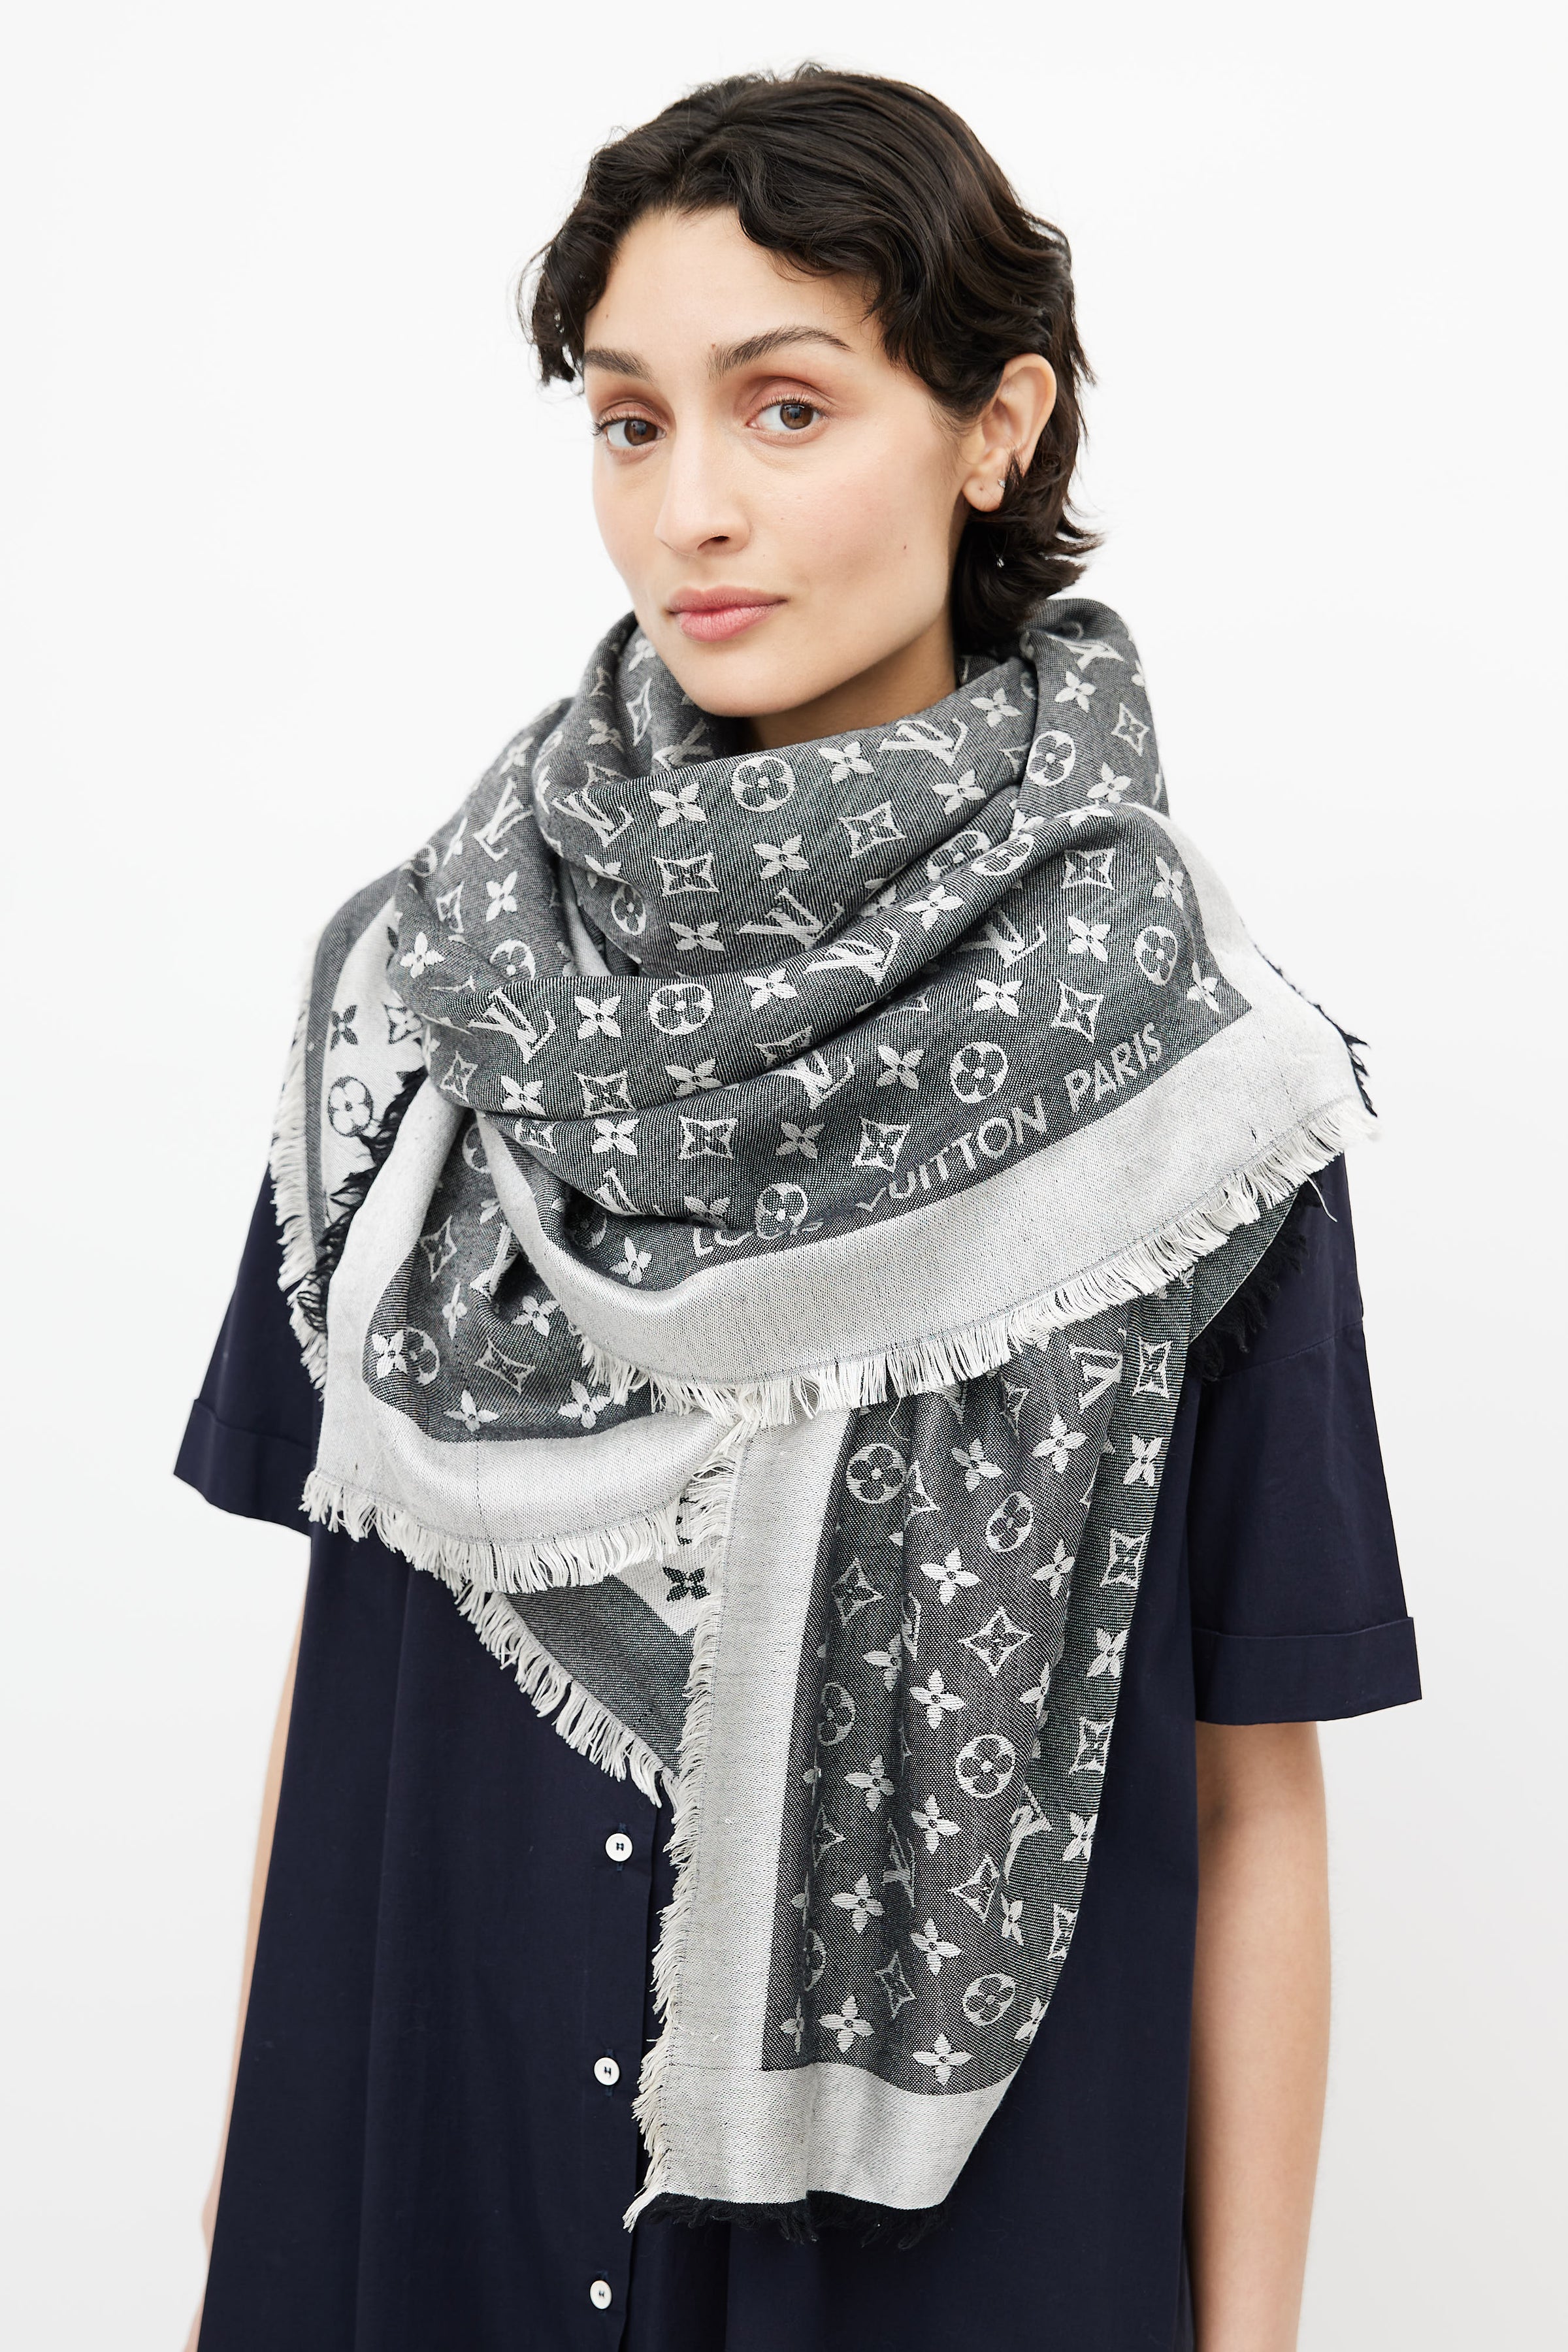 lv scarf